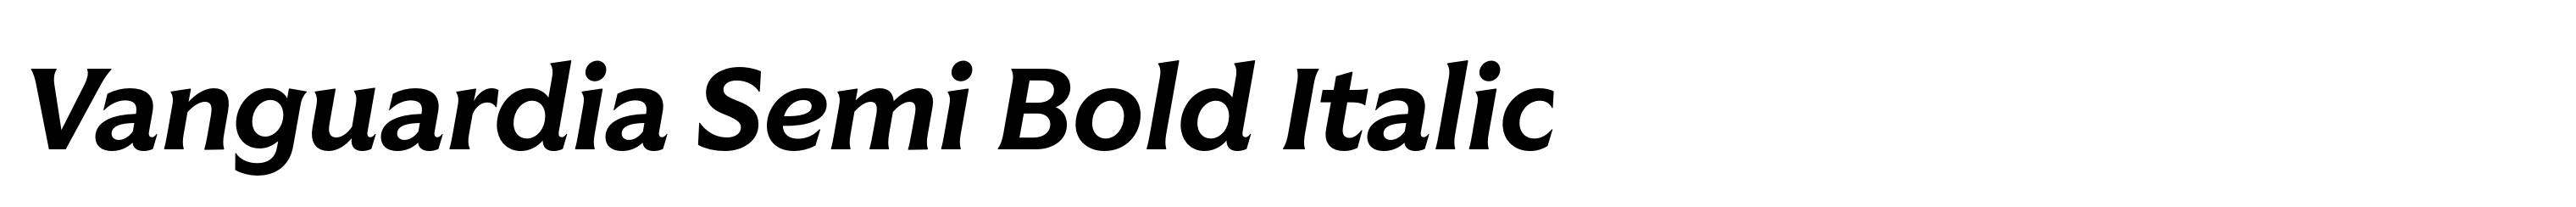 Vanguardia Semi Bold Italic